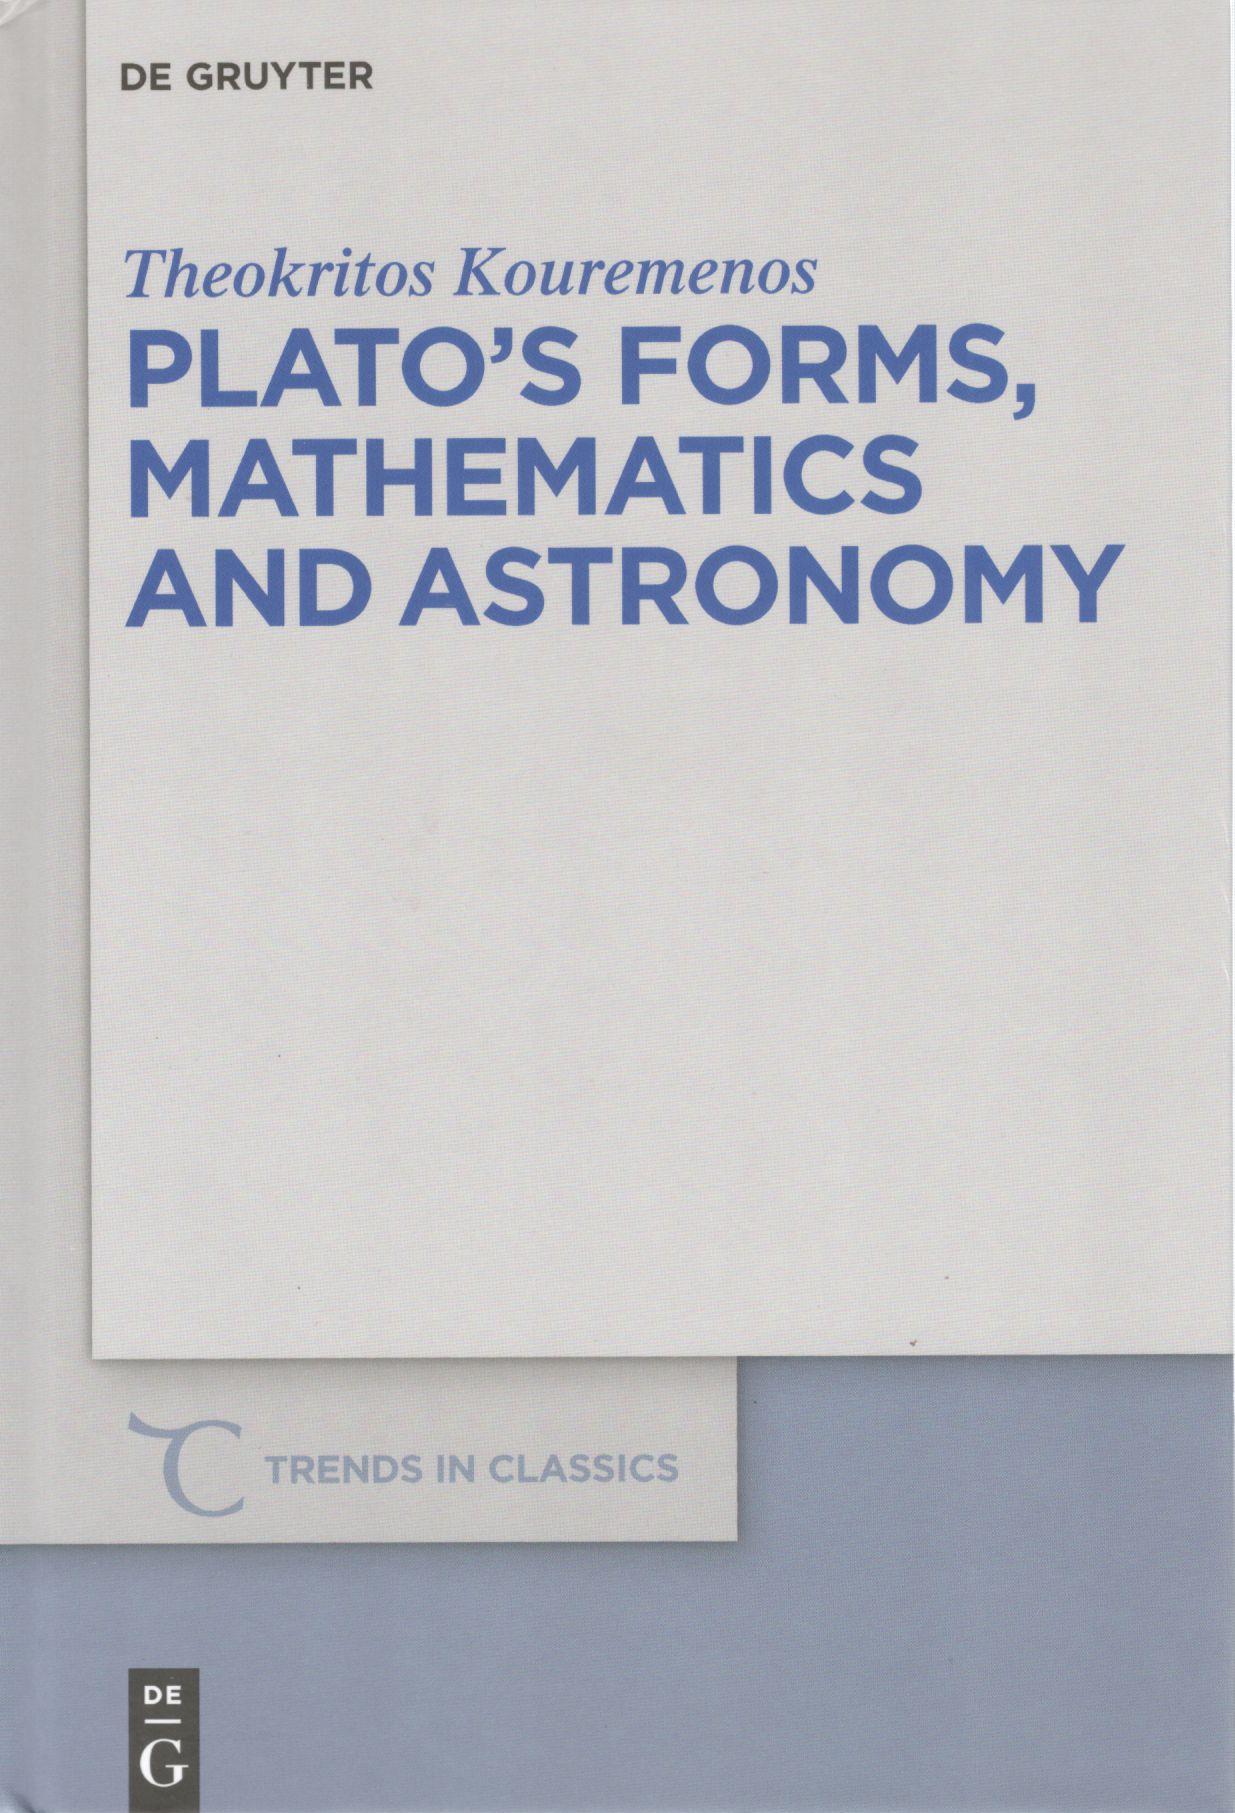 PLATO'S FORMS, MATHEMATICS AND ASTRONOMY